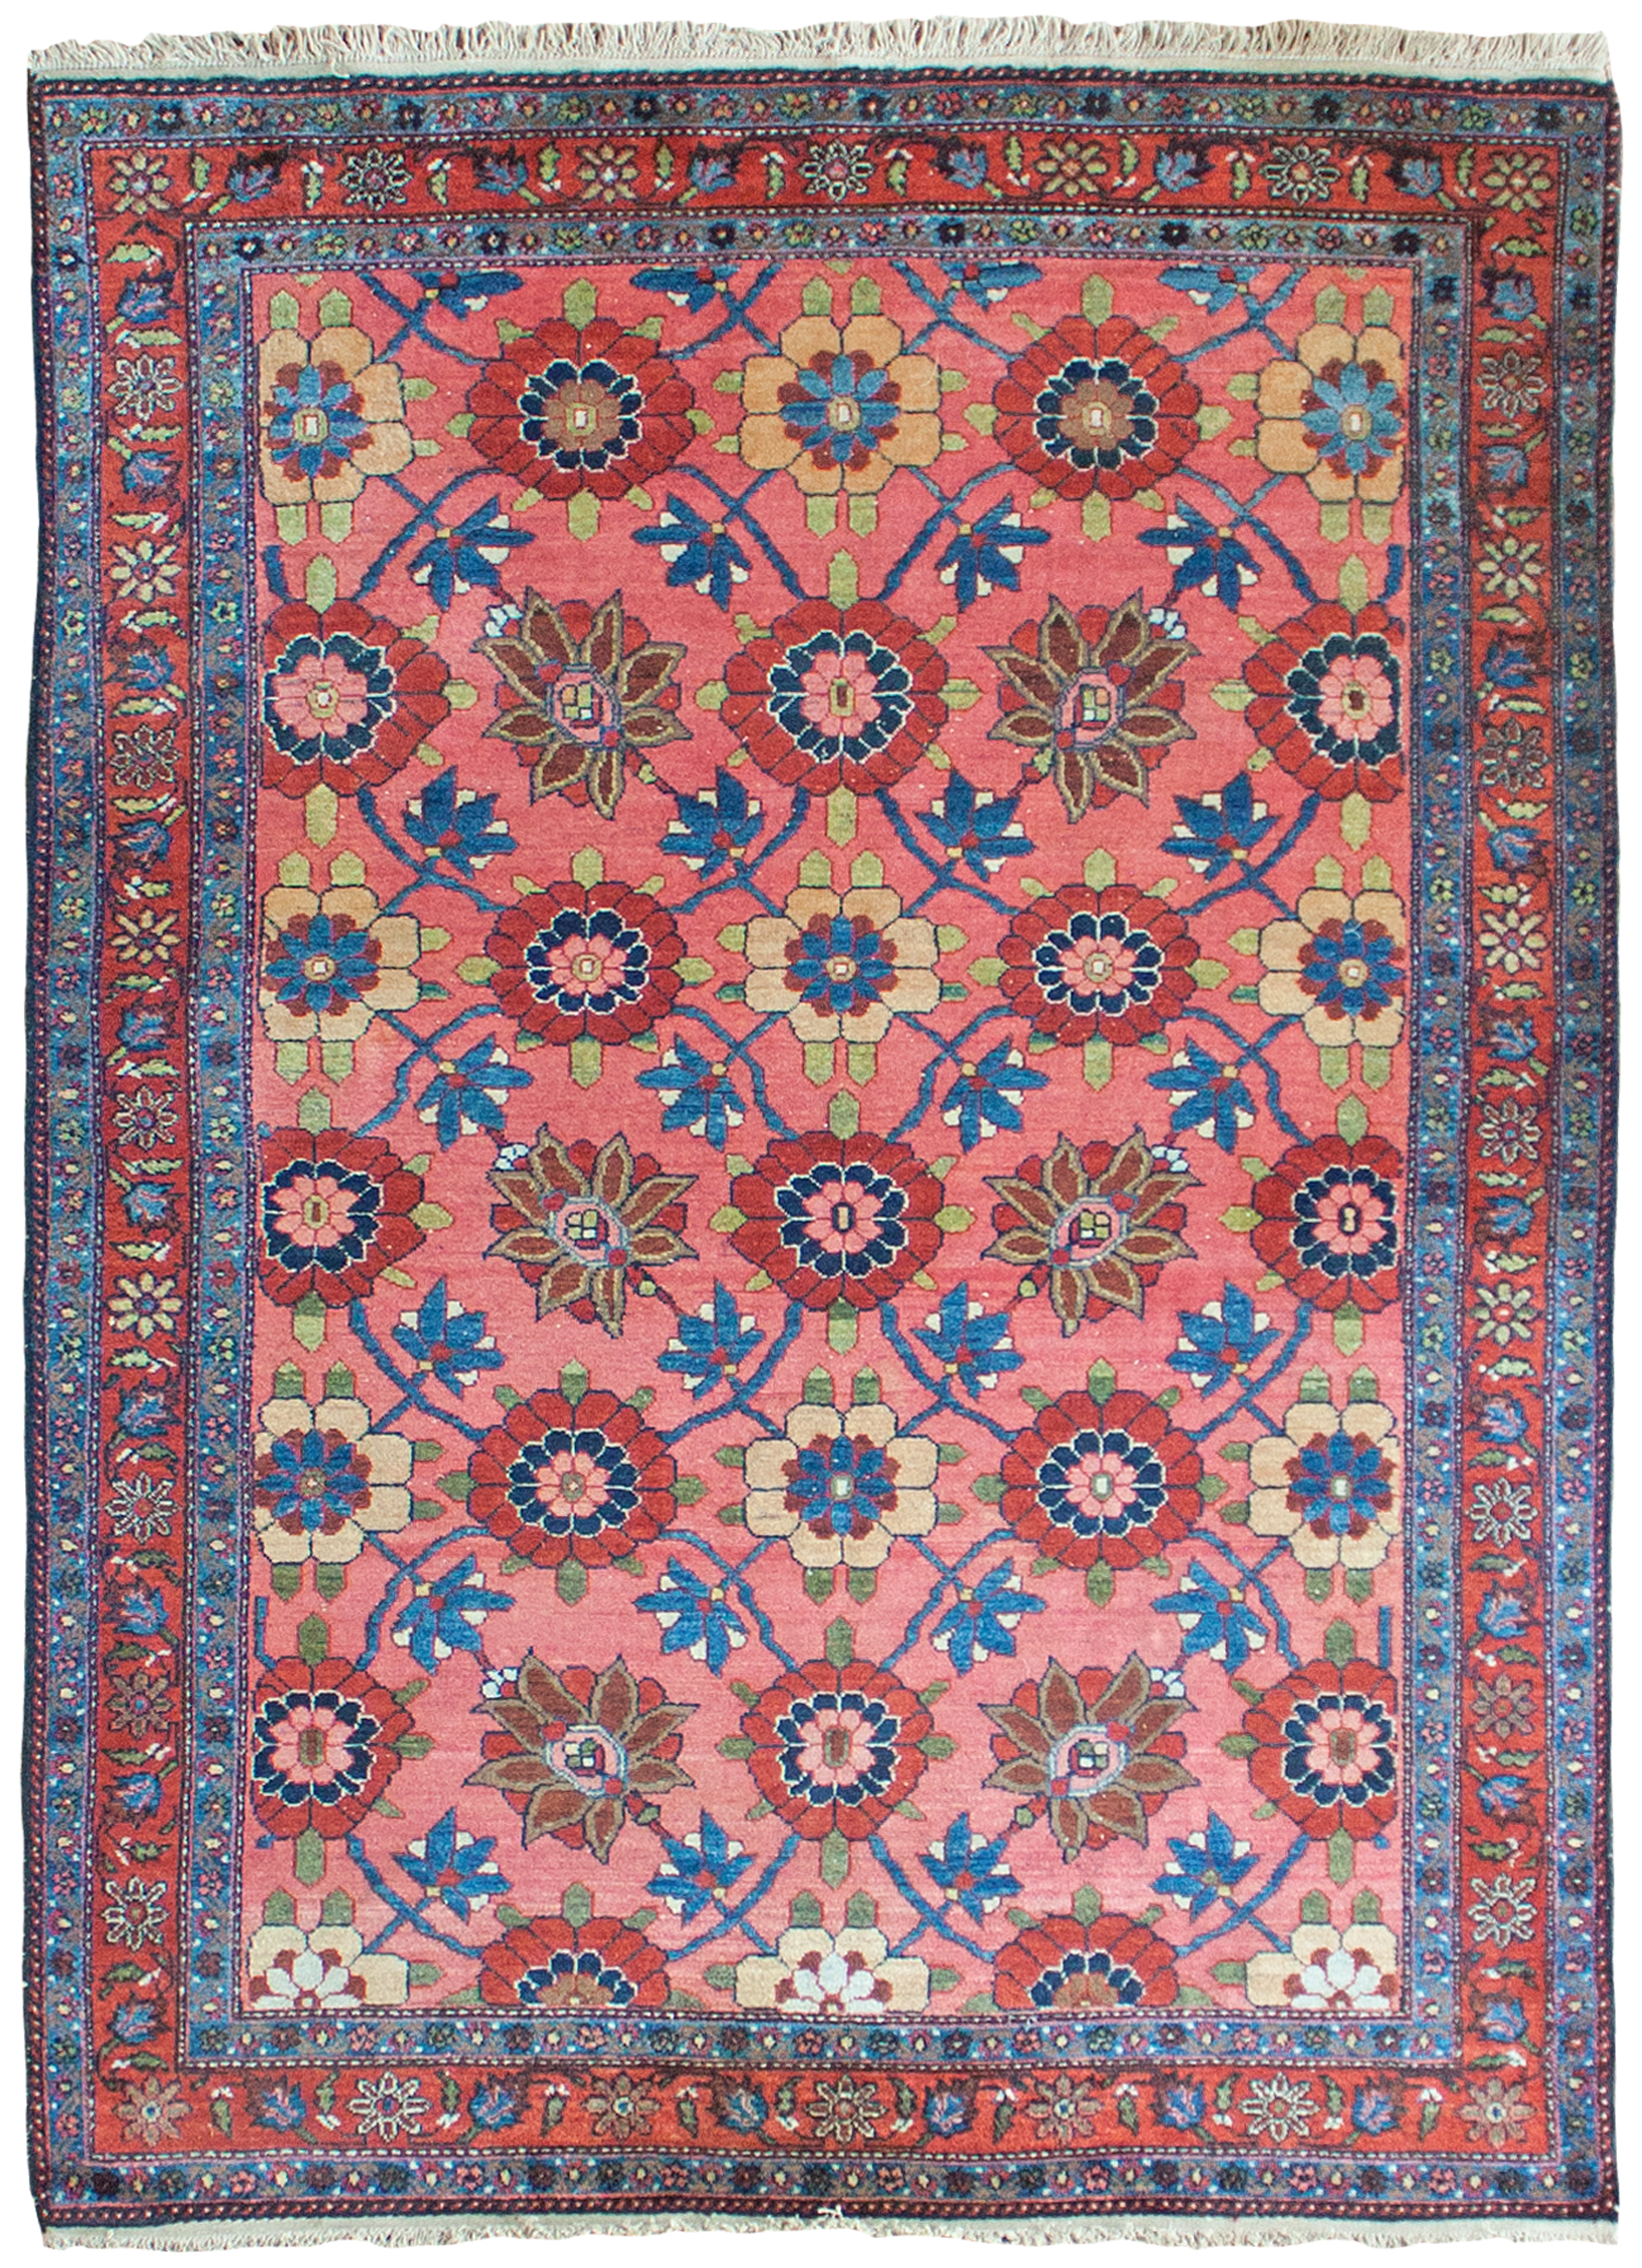 Veramin Antique Rugs and Persian Ferahan Carpets Unite This Room